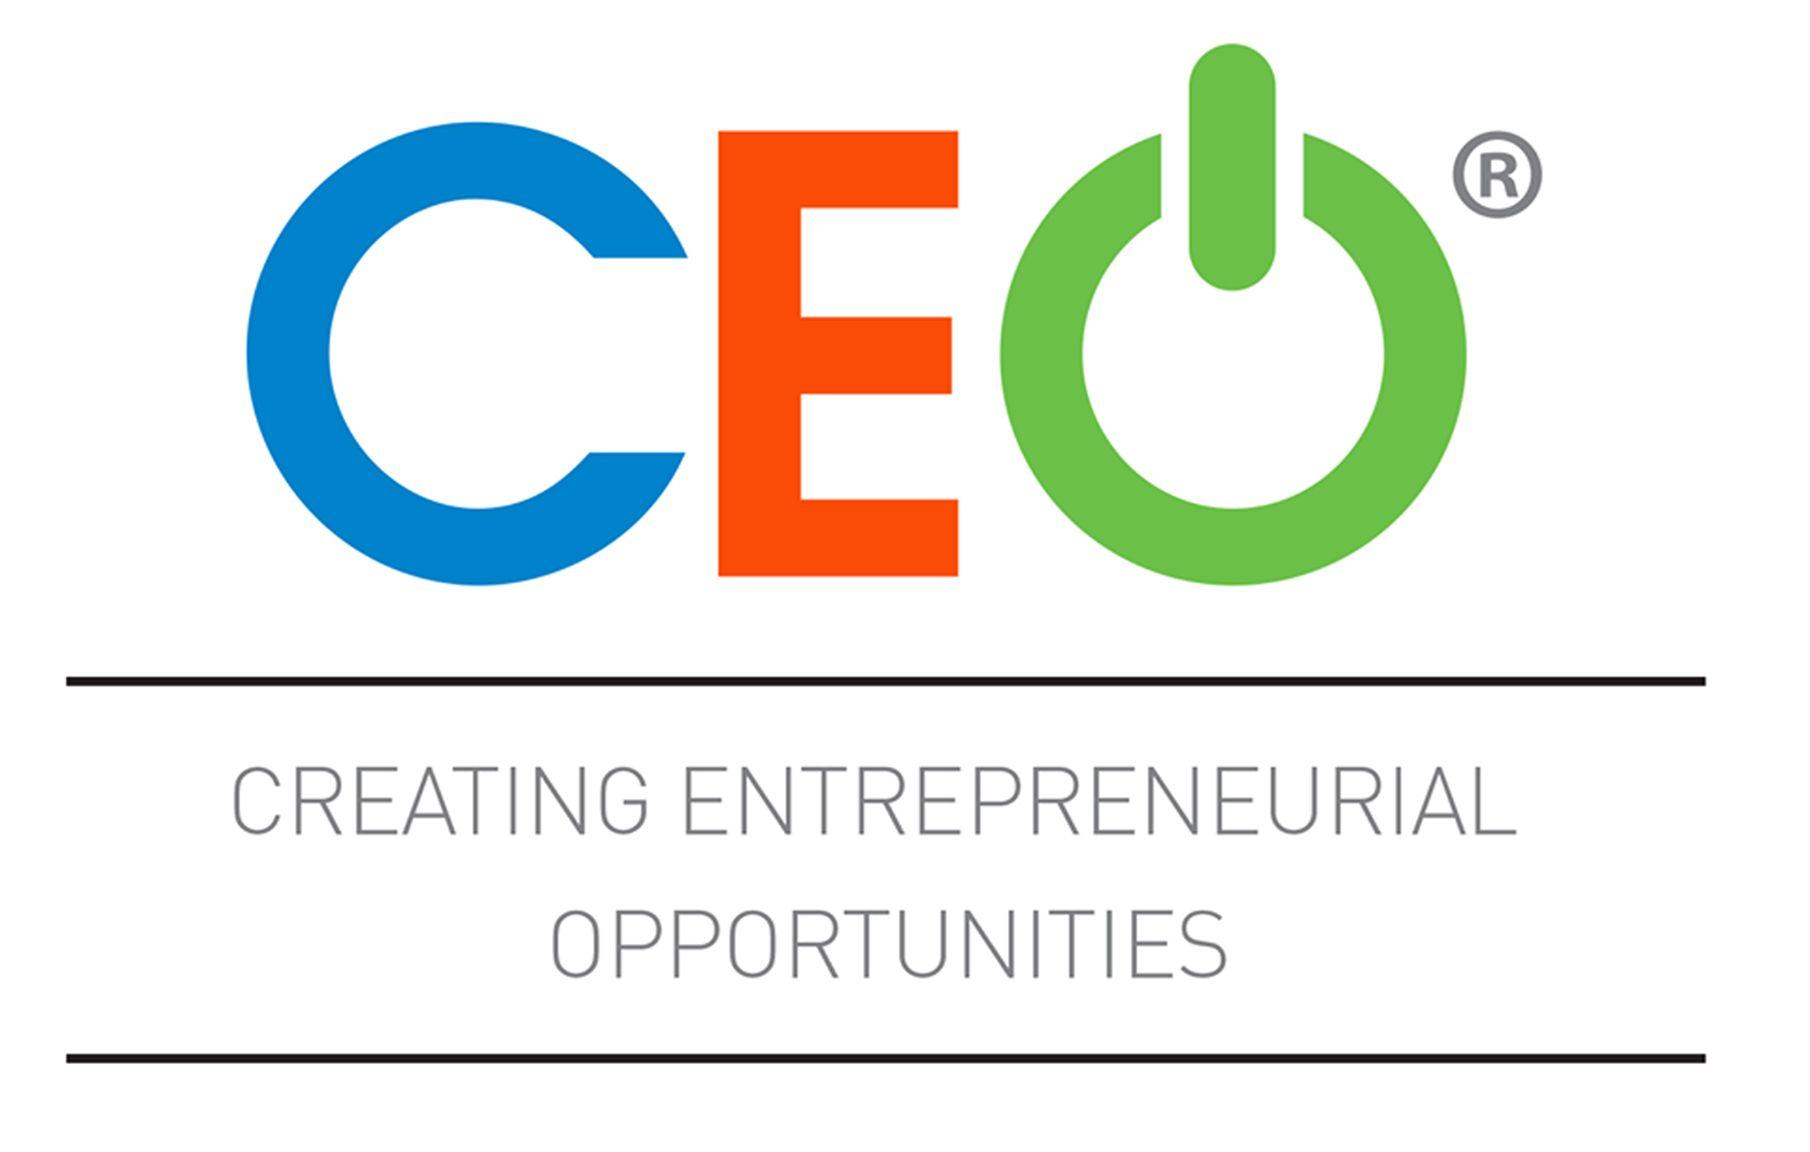 Ceo.com Logo - Knox County CEO